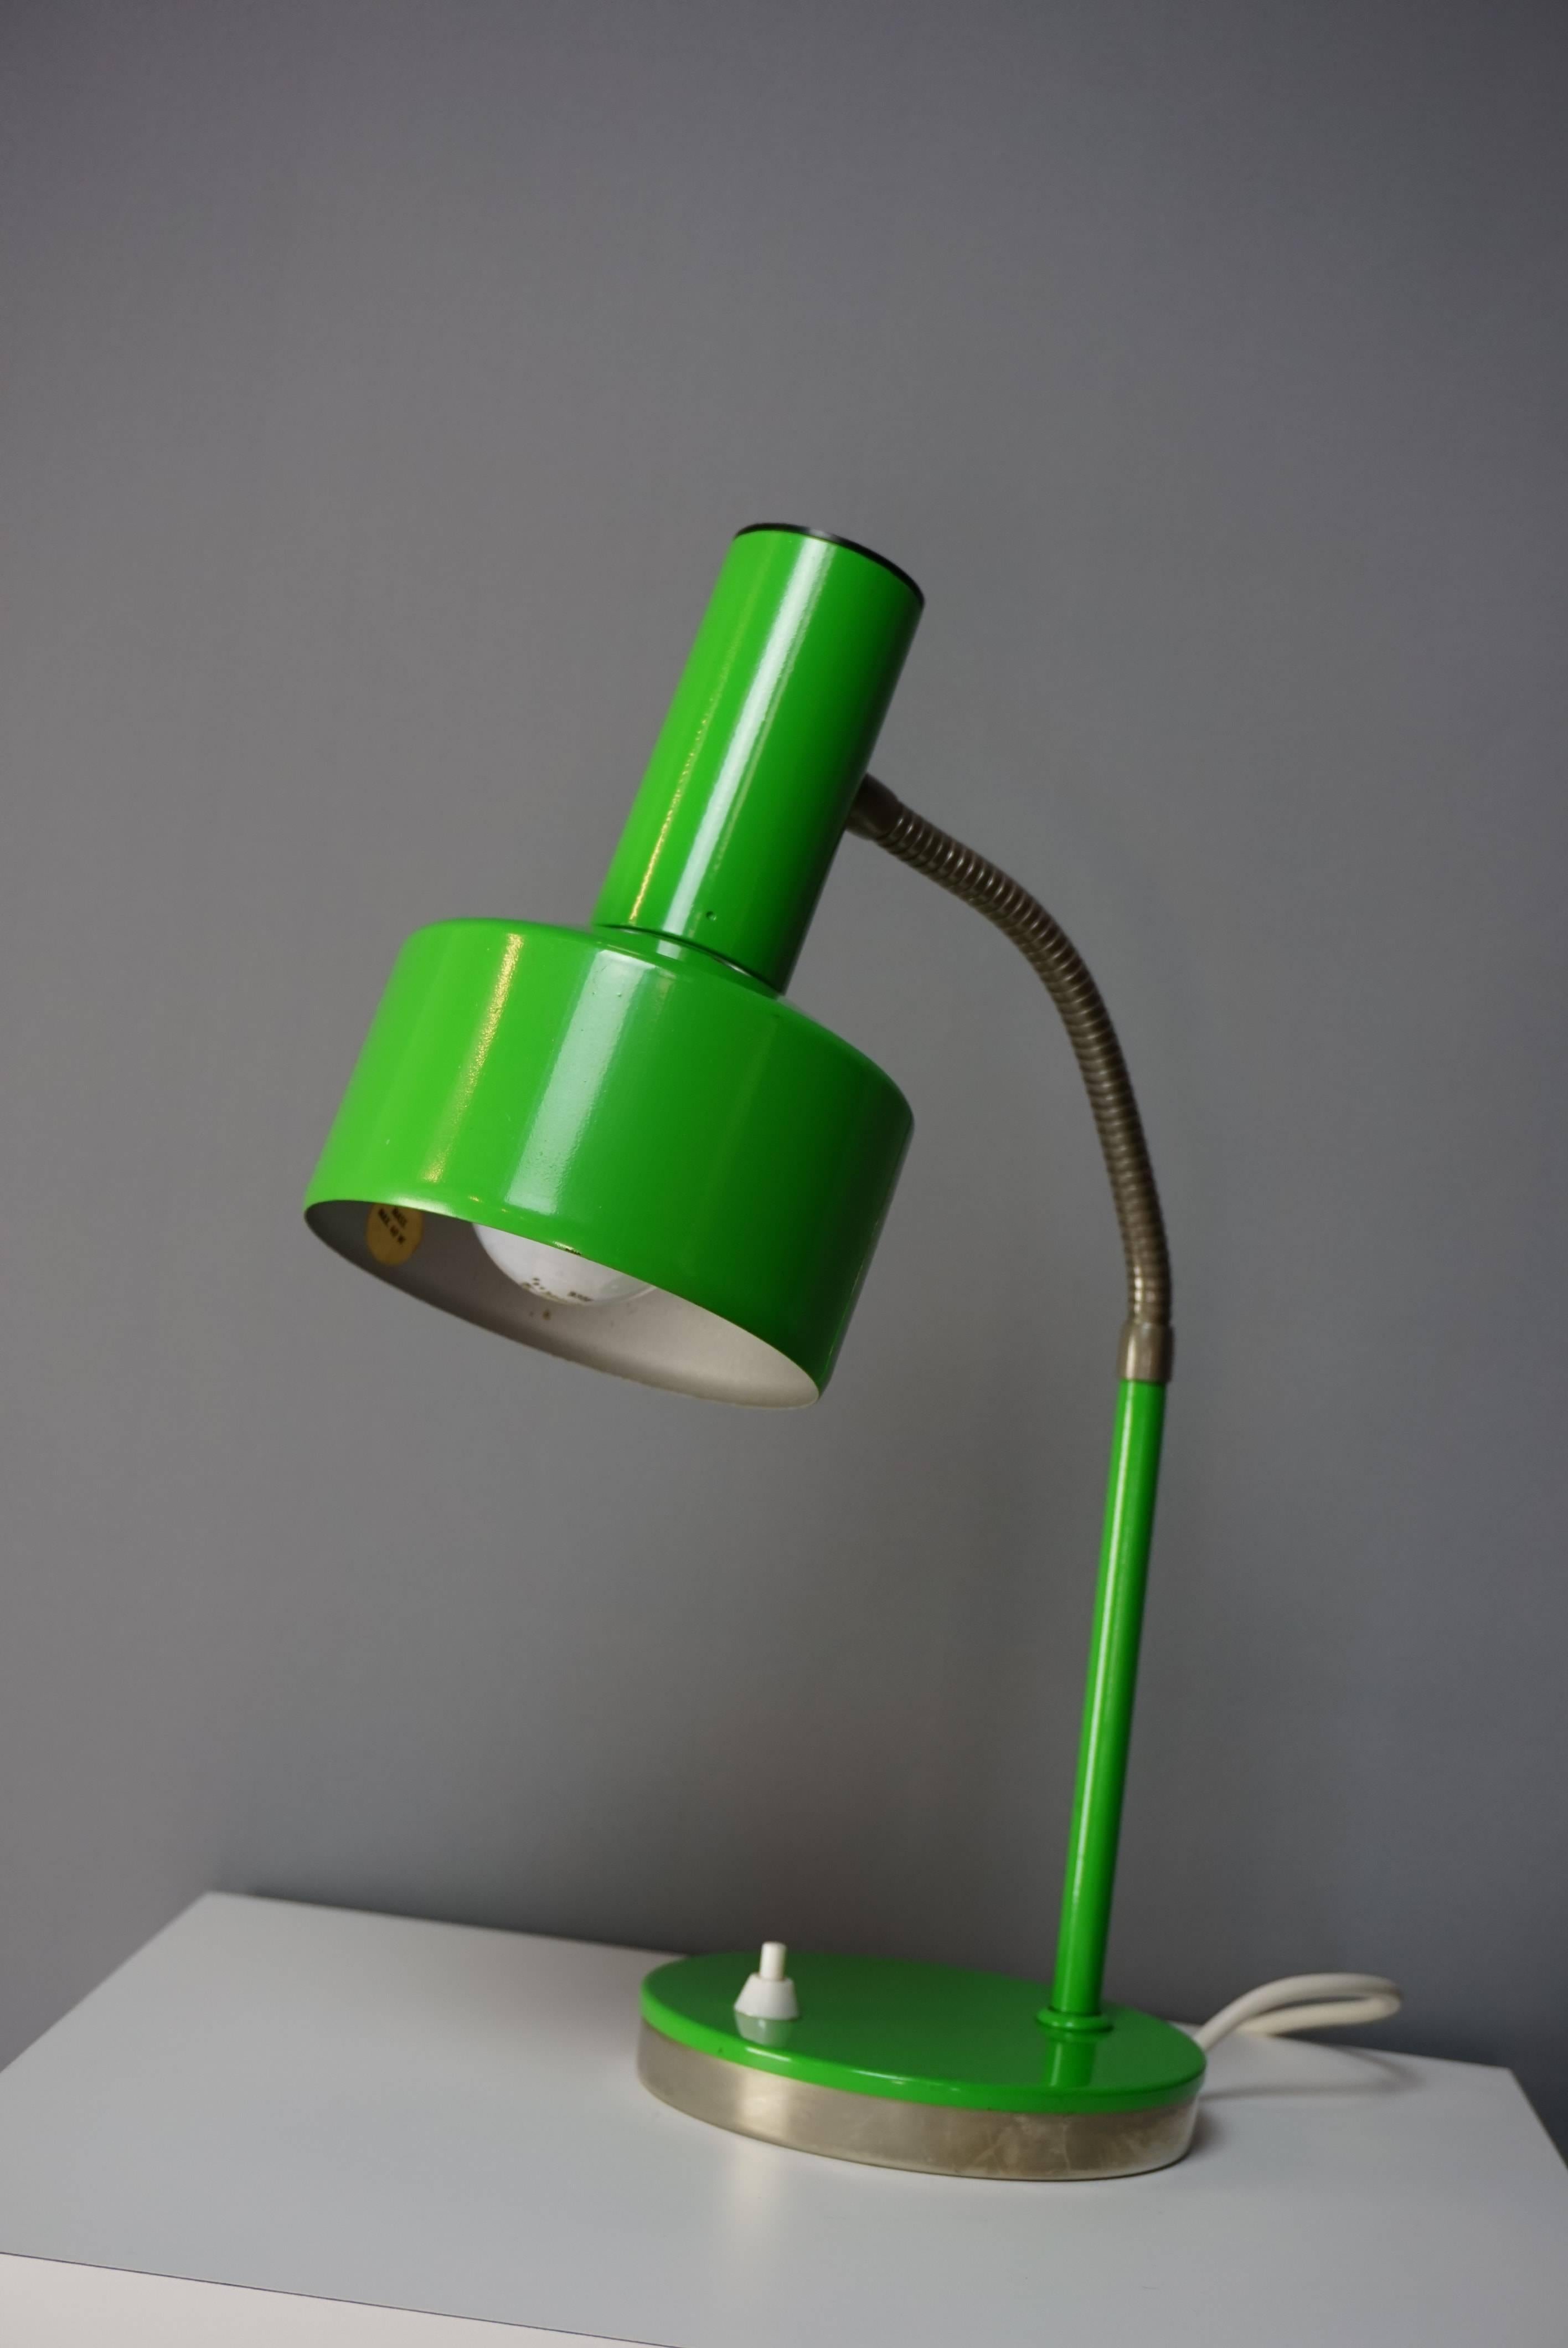 European Midcentury Green Metal Articulated Lamp 1960s Design